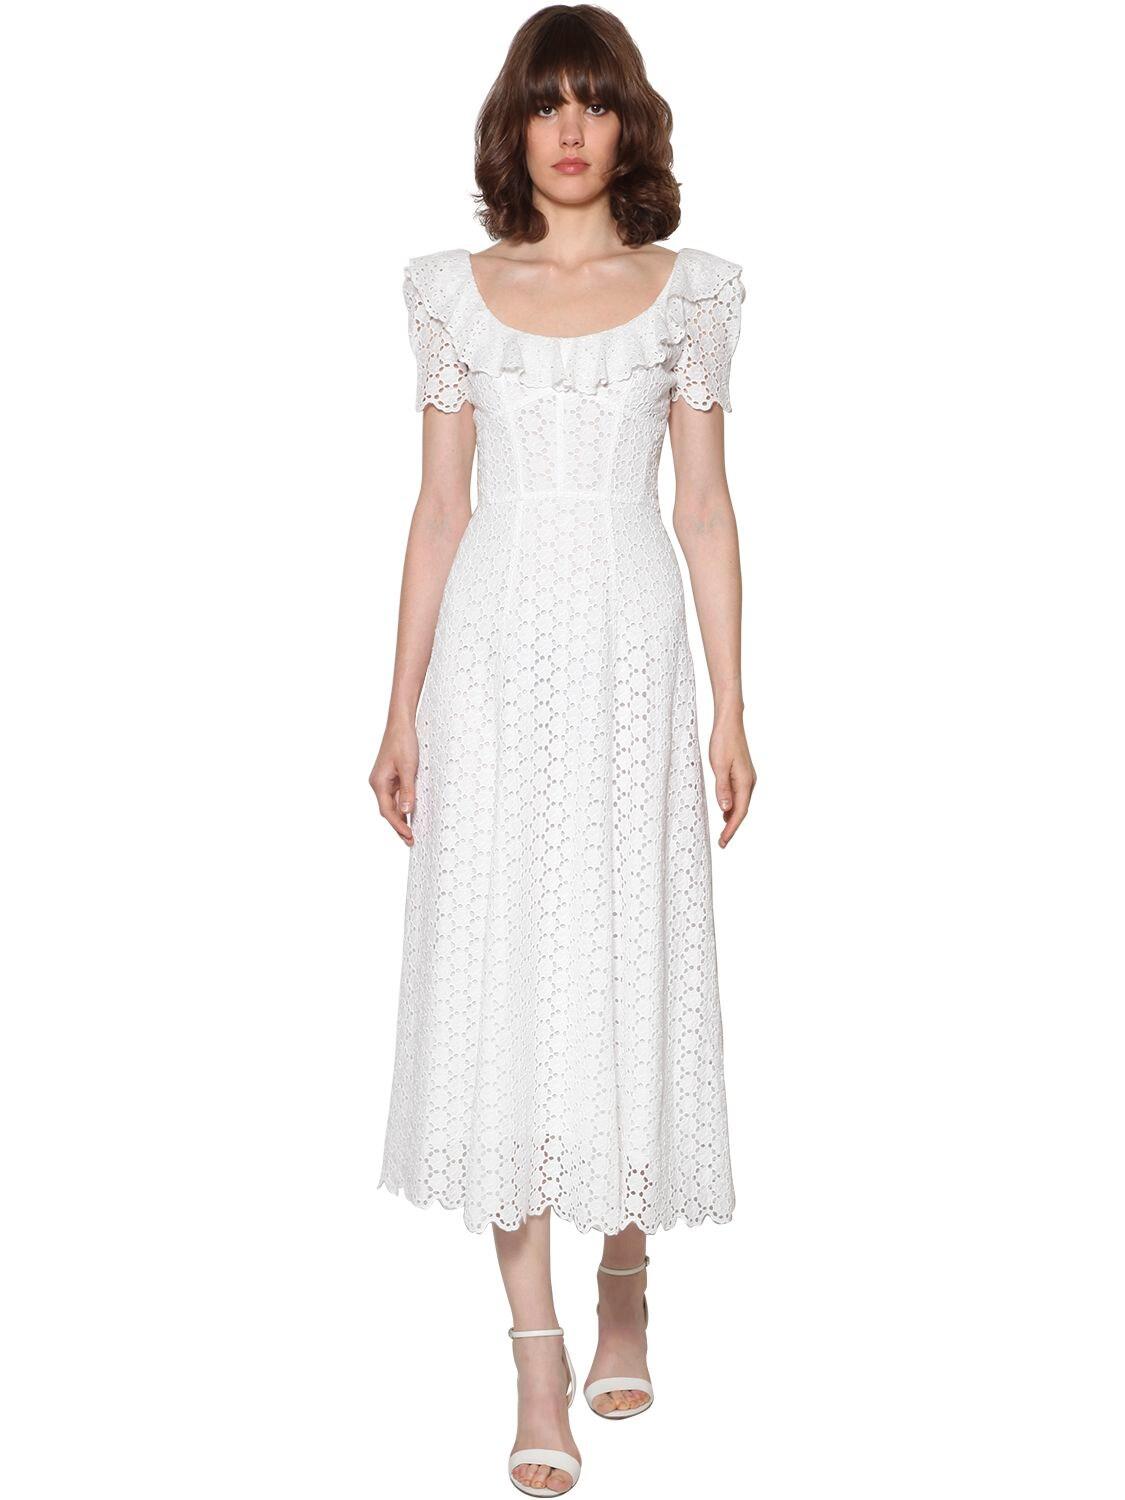 Polo Ralph Lauren Ruffled Eyelet Lace Cotton Midi Dress in White | Lyst